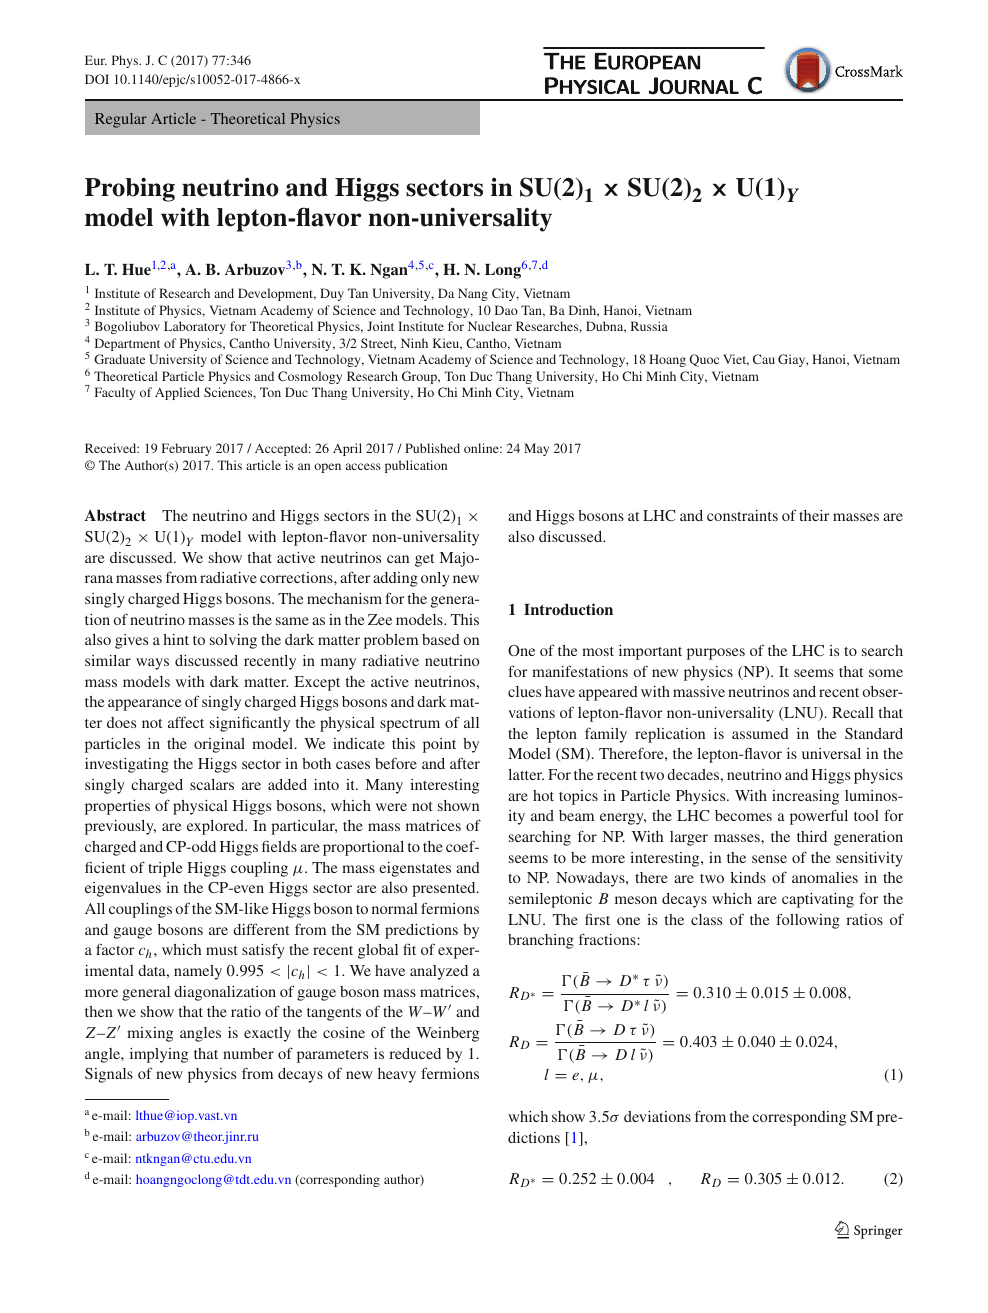 Probing Neutrino And Higgs Sectors In Text Su 2 1 Times Text Su 2 2 Times Text U 1 Y Su 2 1 Su 2 2 U 1 Y Model With Lepton Flavor Non Universality Topic